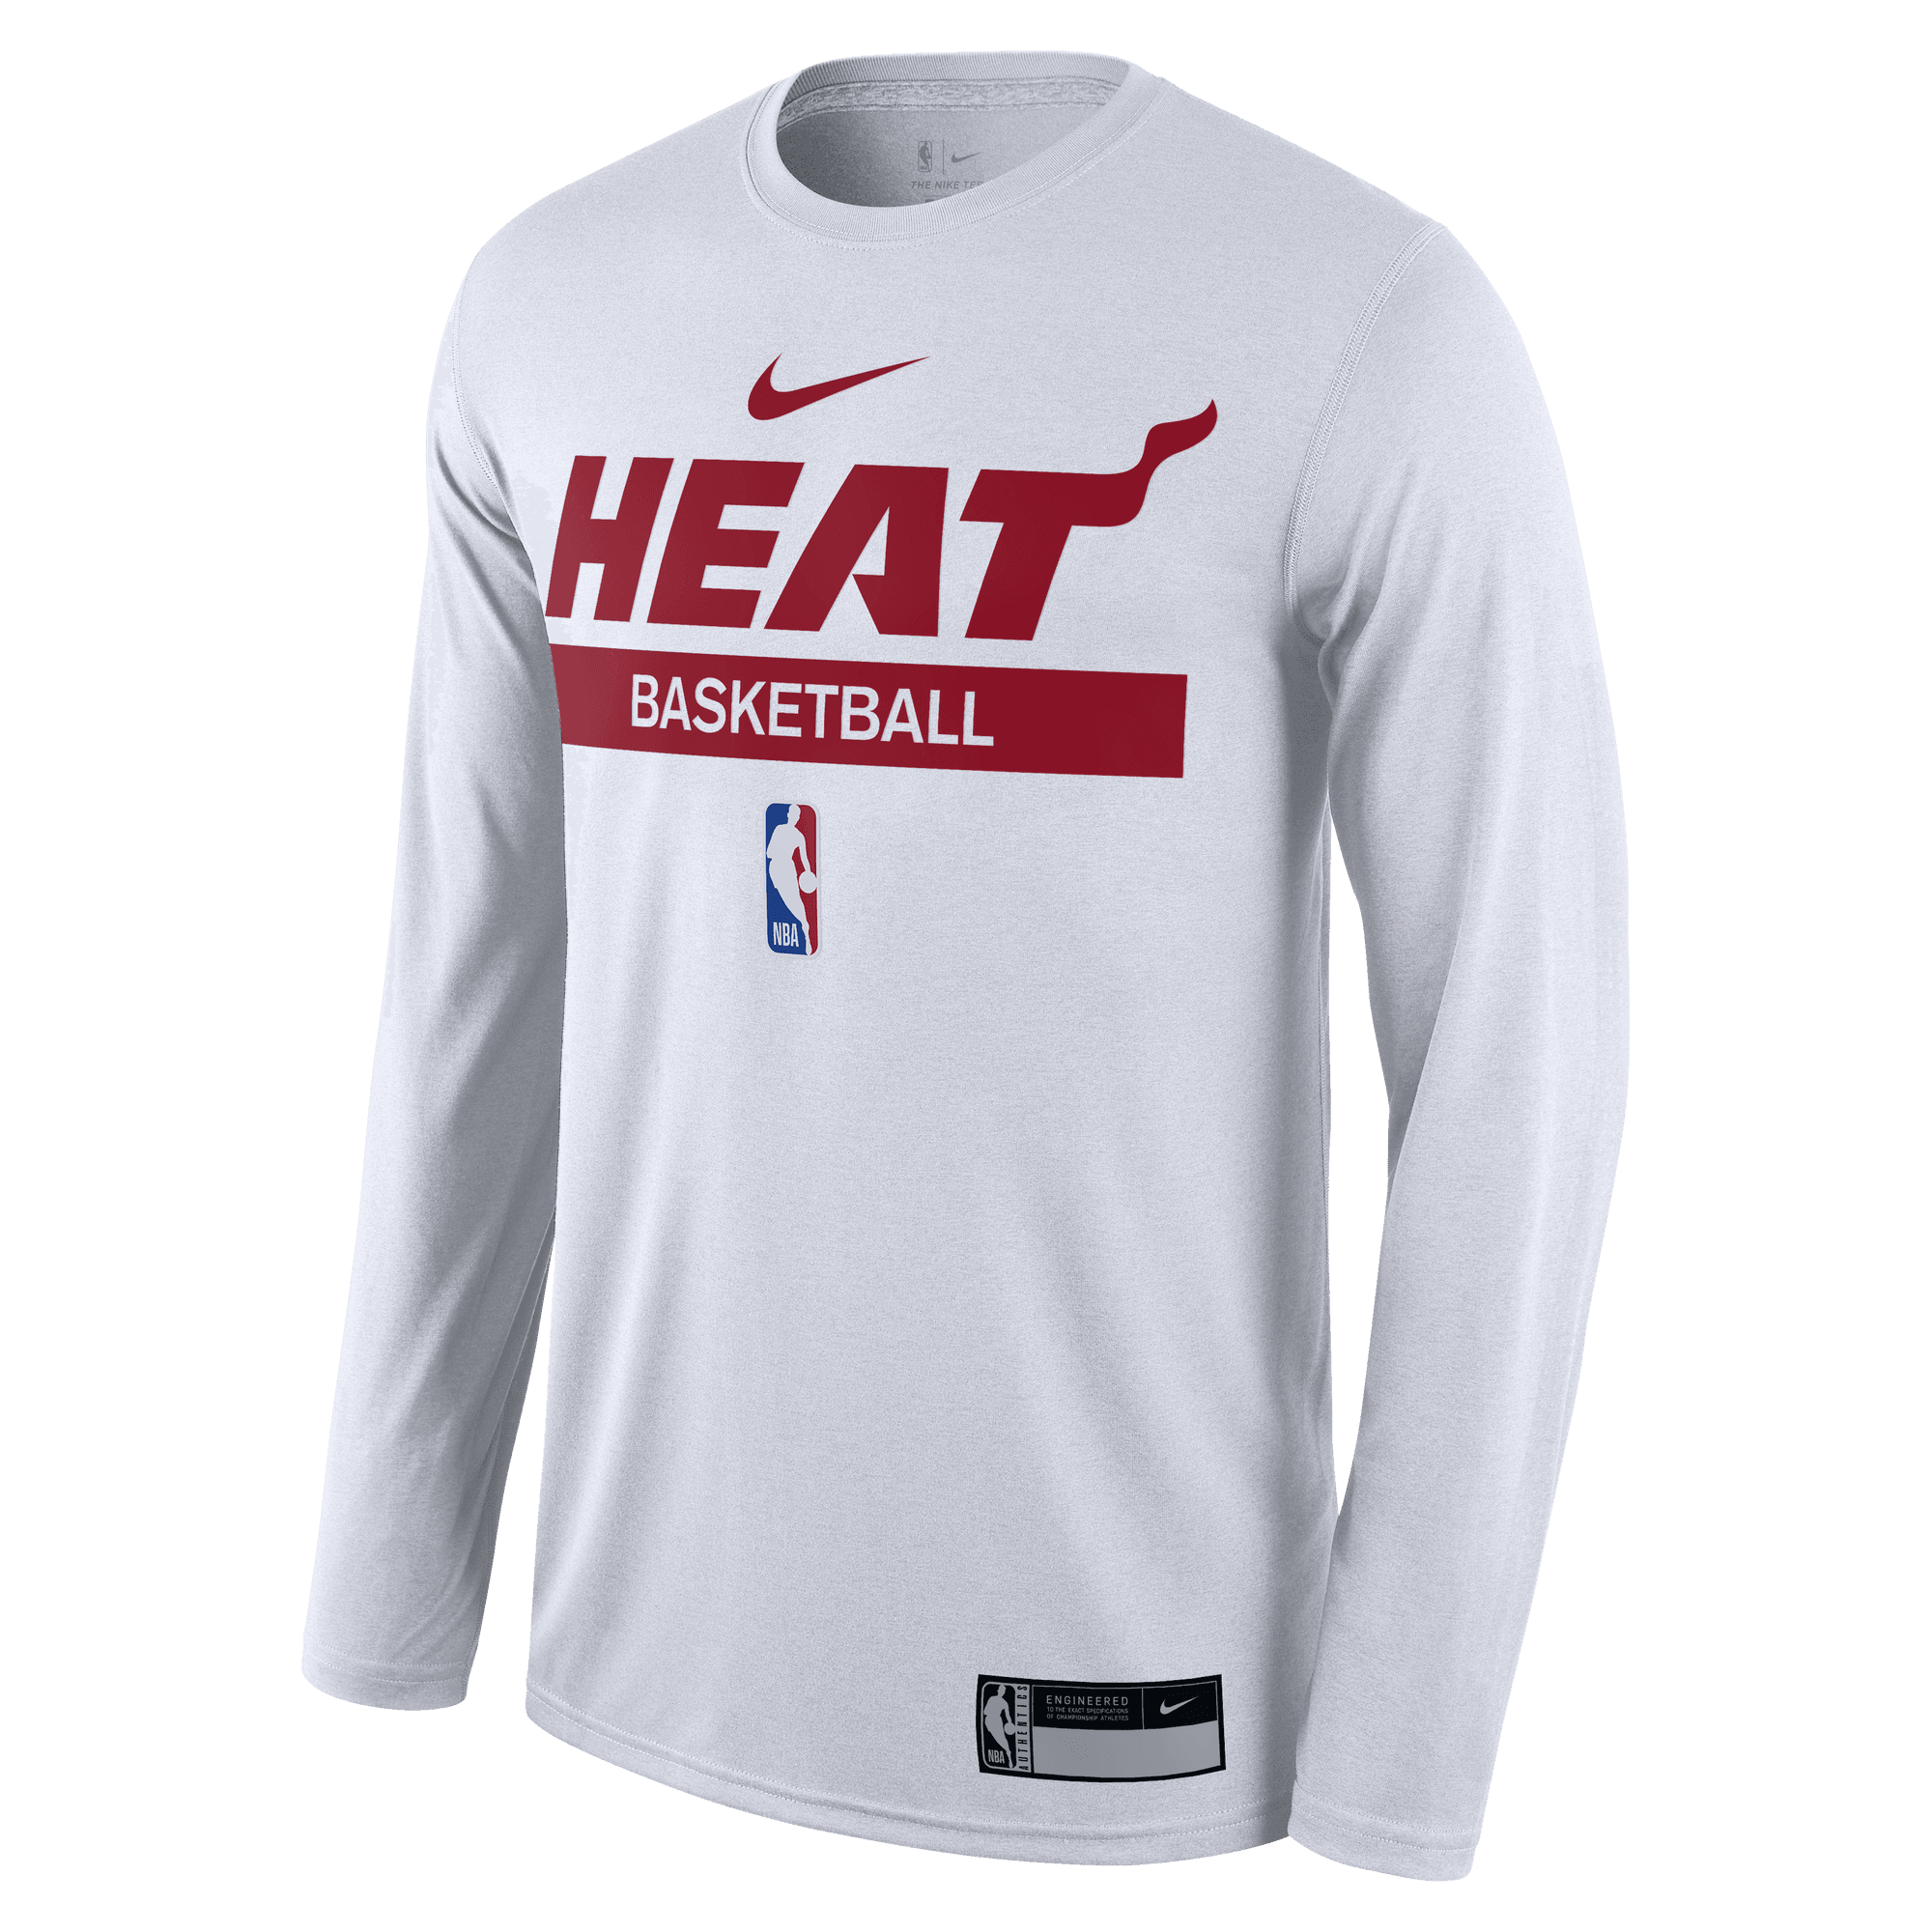 Miami Vice Basketball Sneakers - Miami Heat - Long Sleeve T-Shirt